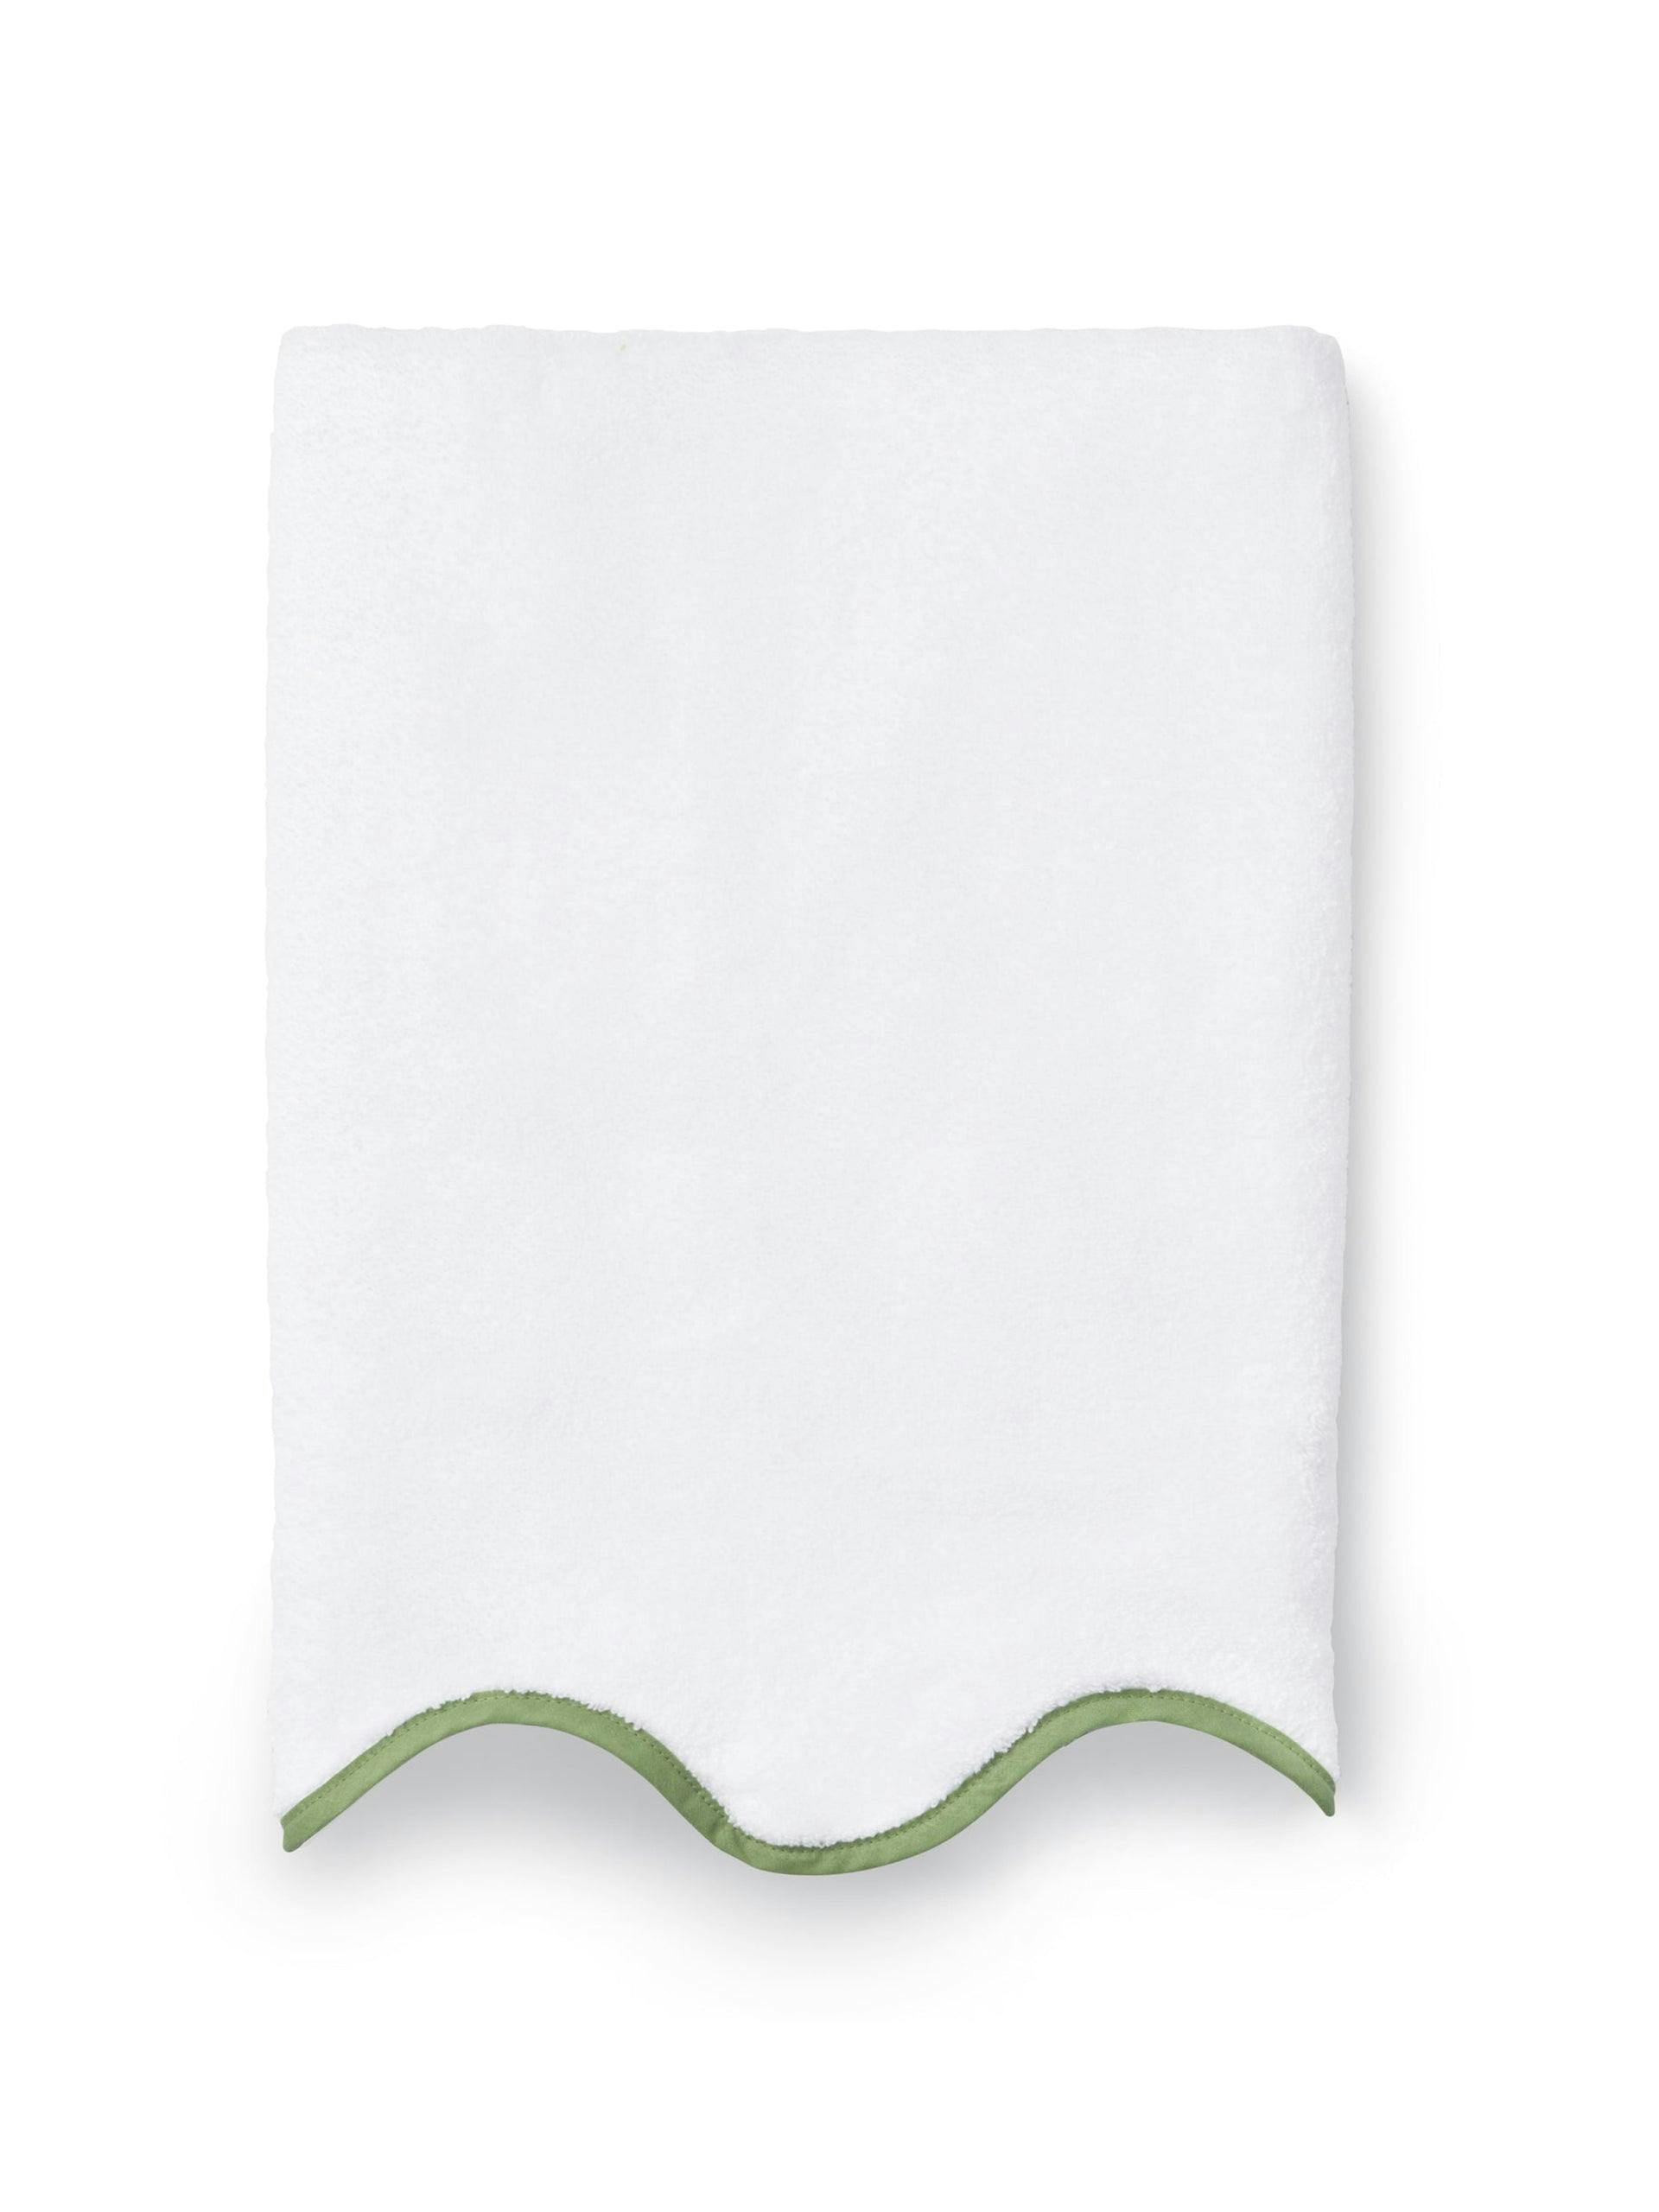 Amelia white/green scalloped bath towels